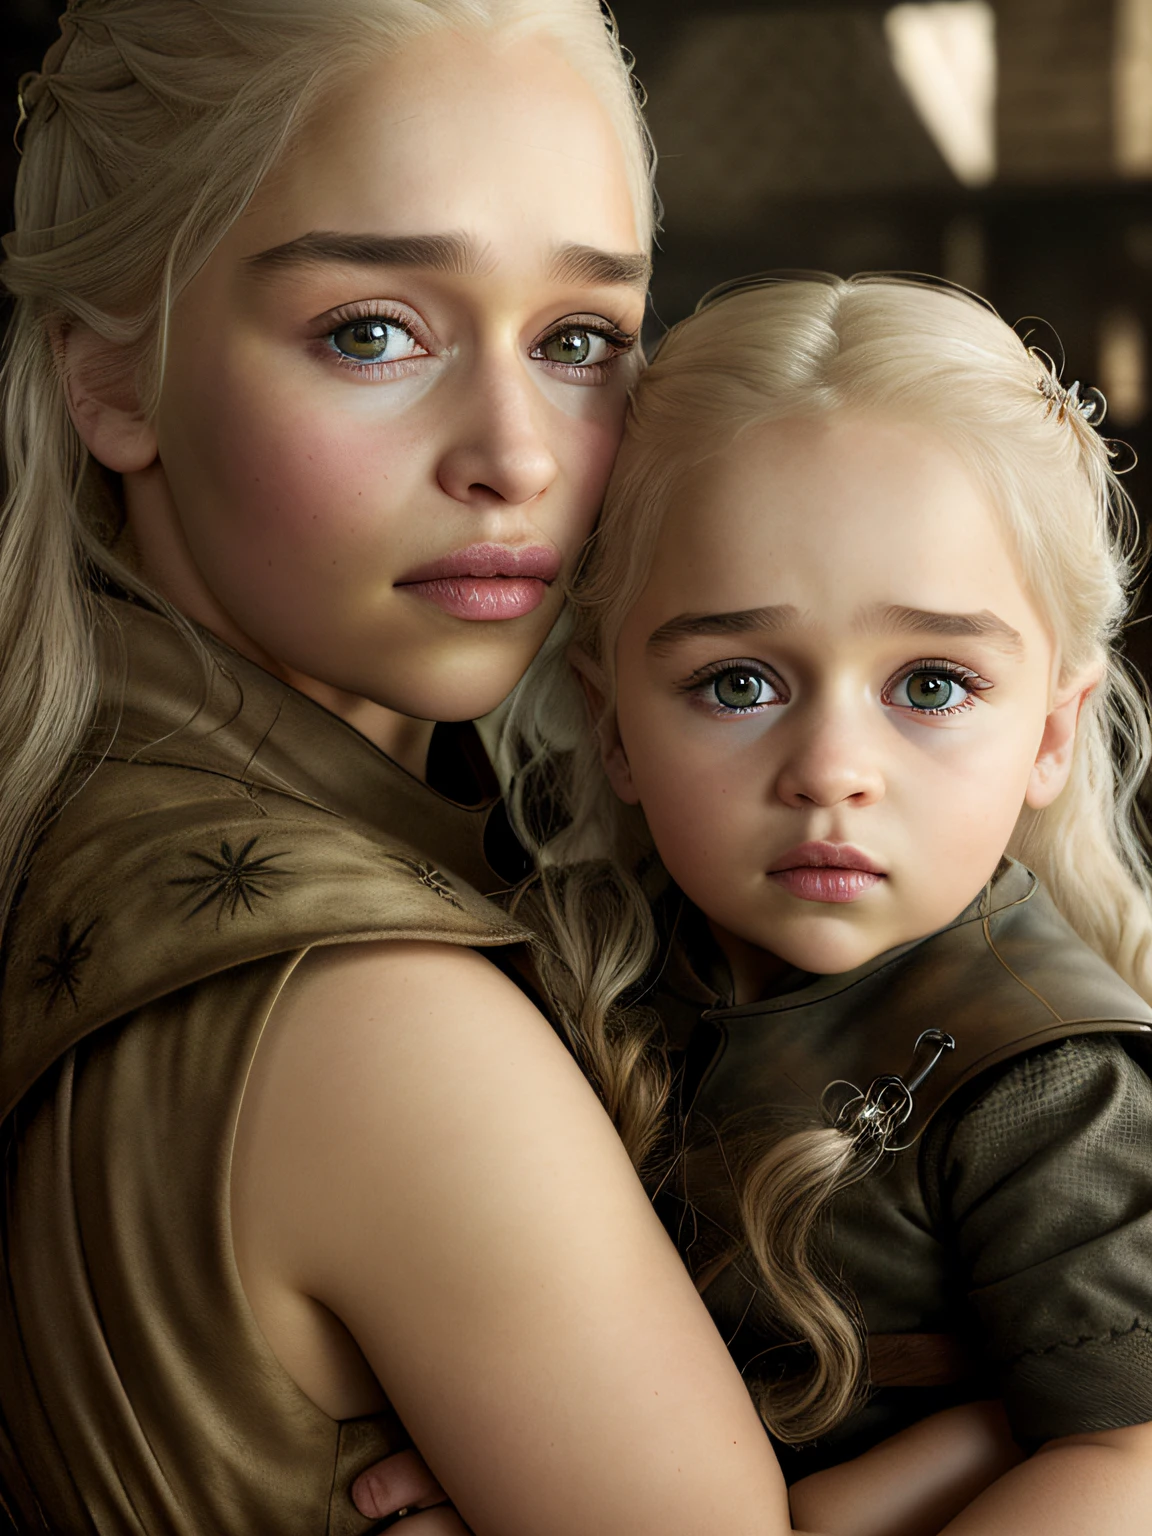 4k, hight quality, (Jon Snow) and [daenerys targaryen|Emilia Clarke] holding a 5 year old girl, Game of Thrones, lightroom, soft light, (natural skin texture:1.2), (hyperrealism:1.1)